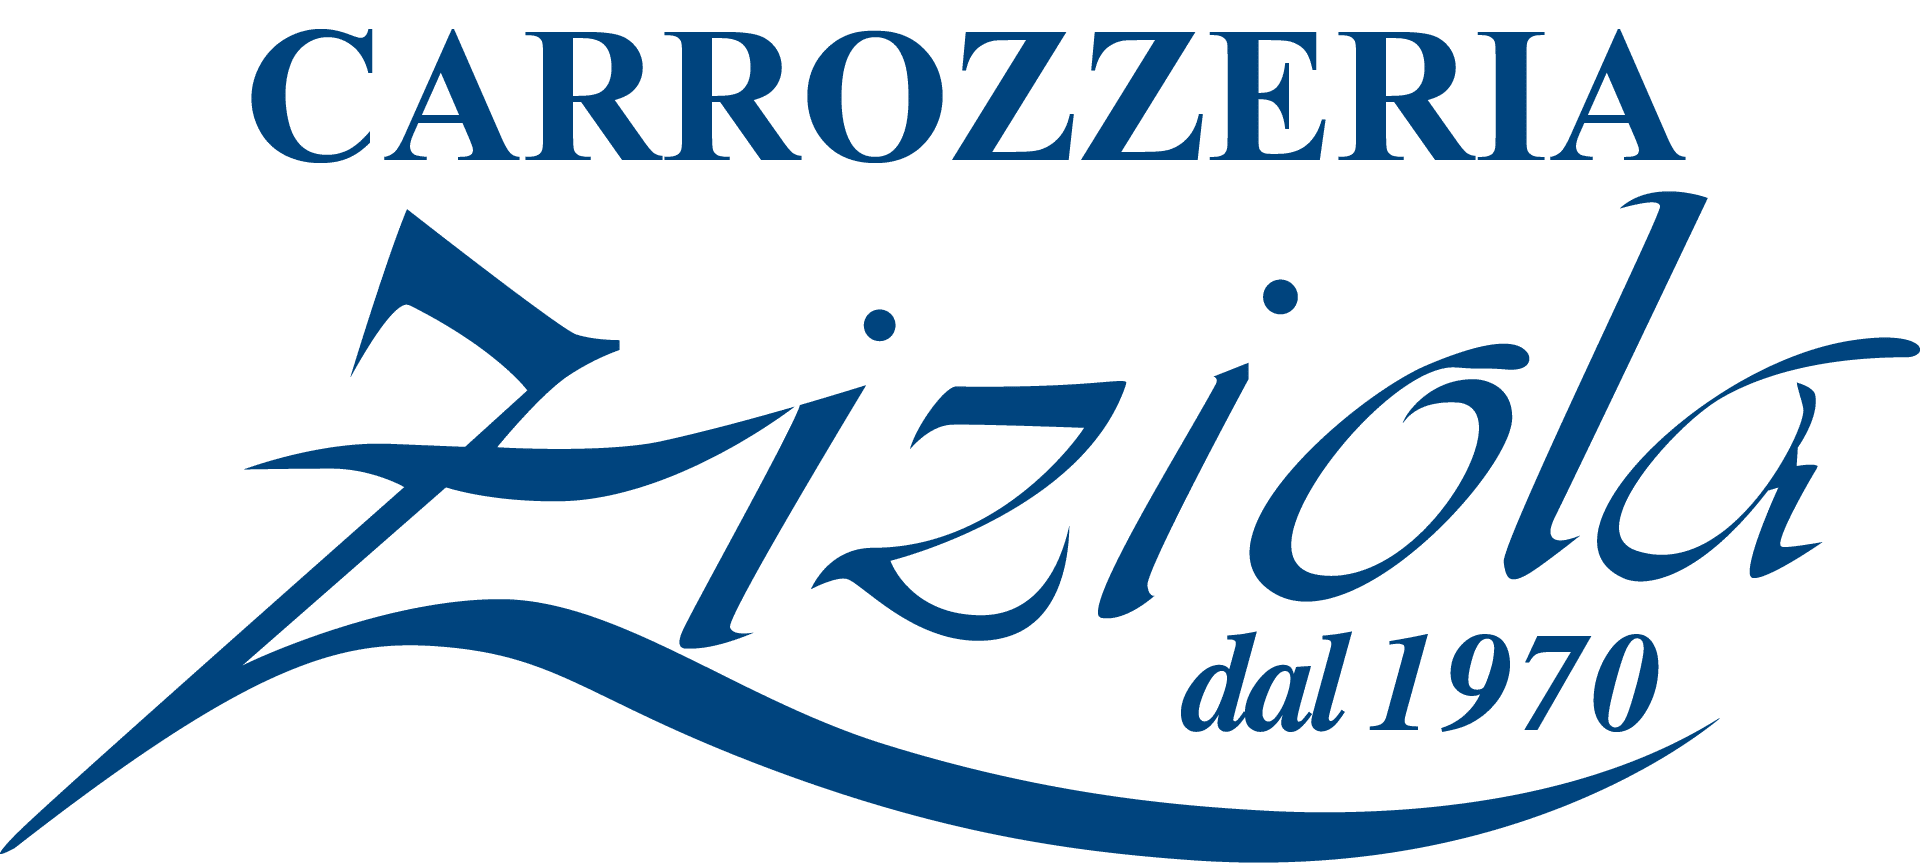 Carrozzeria Ziziola Brescia